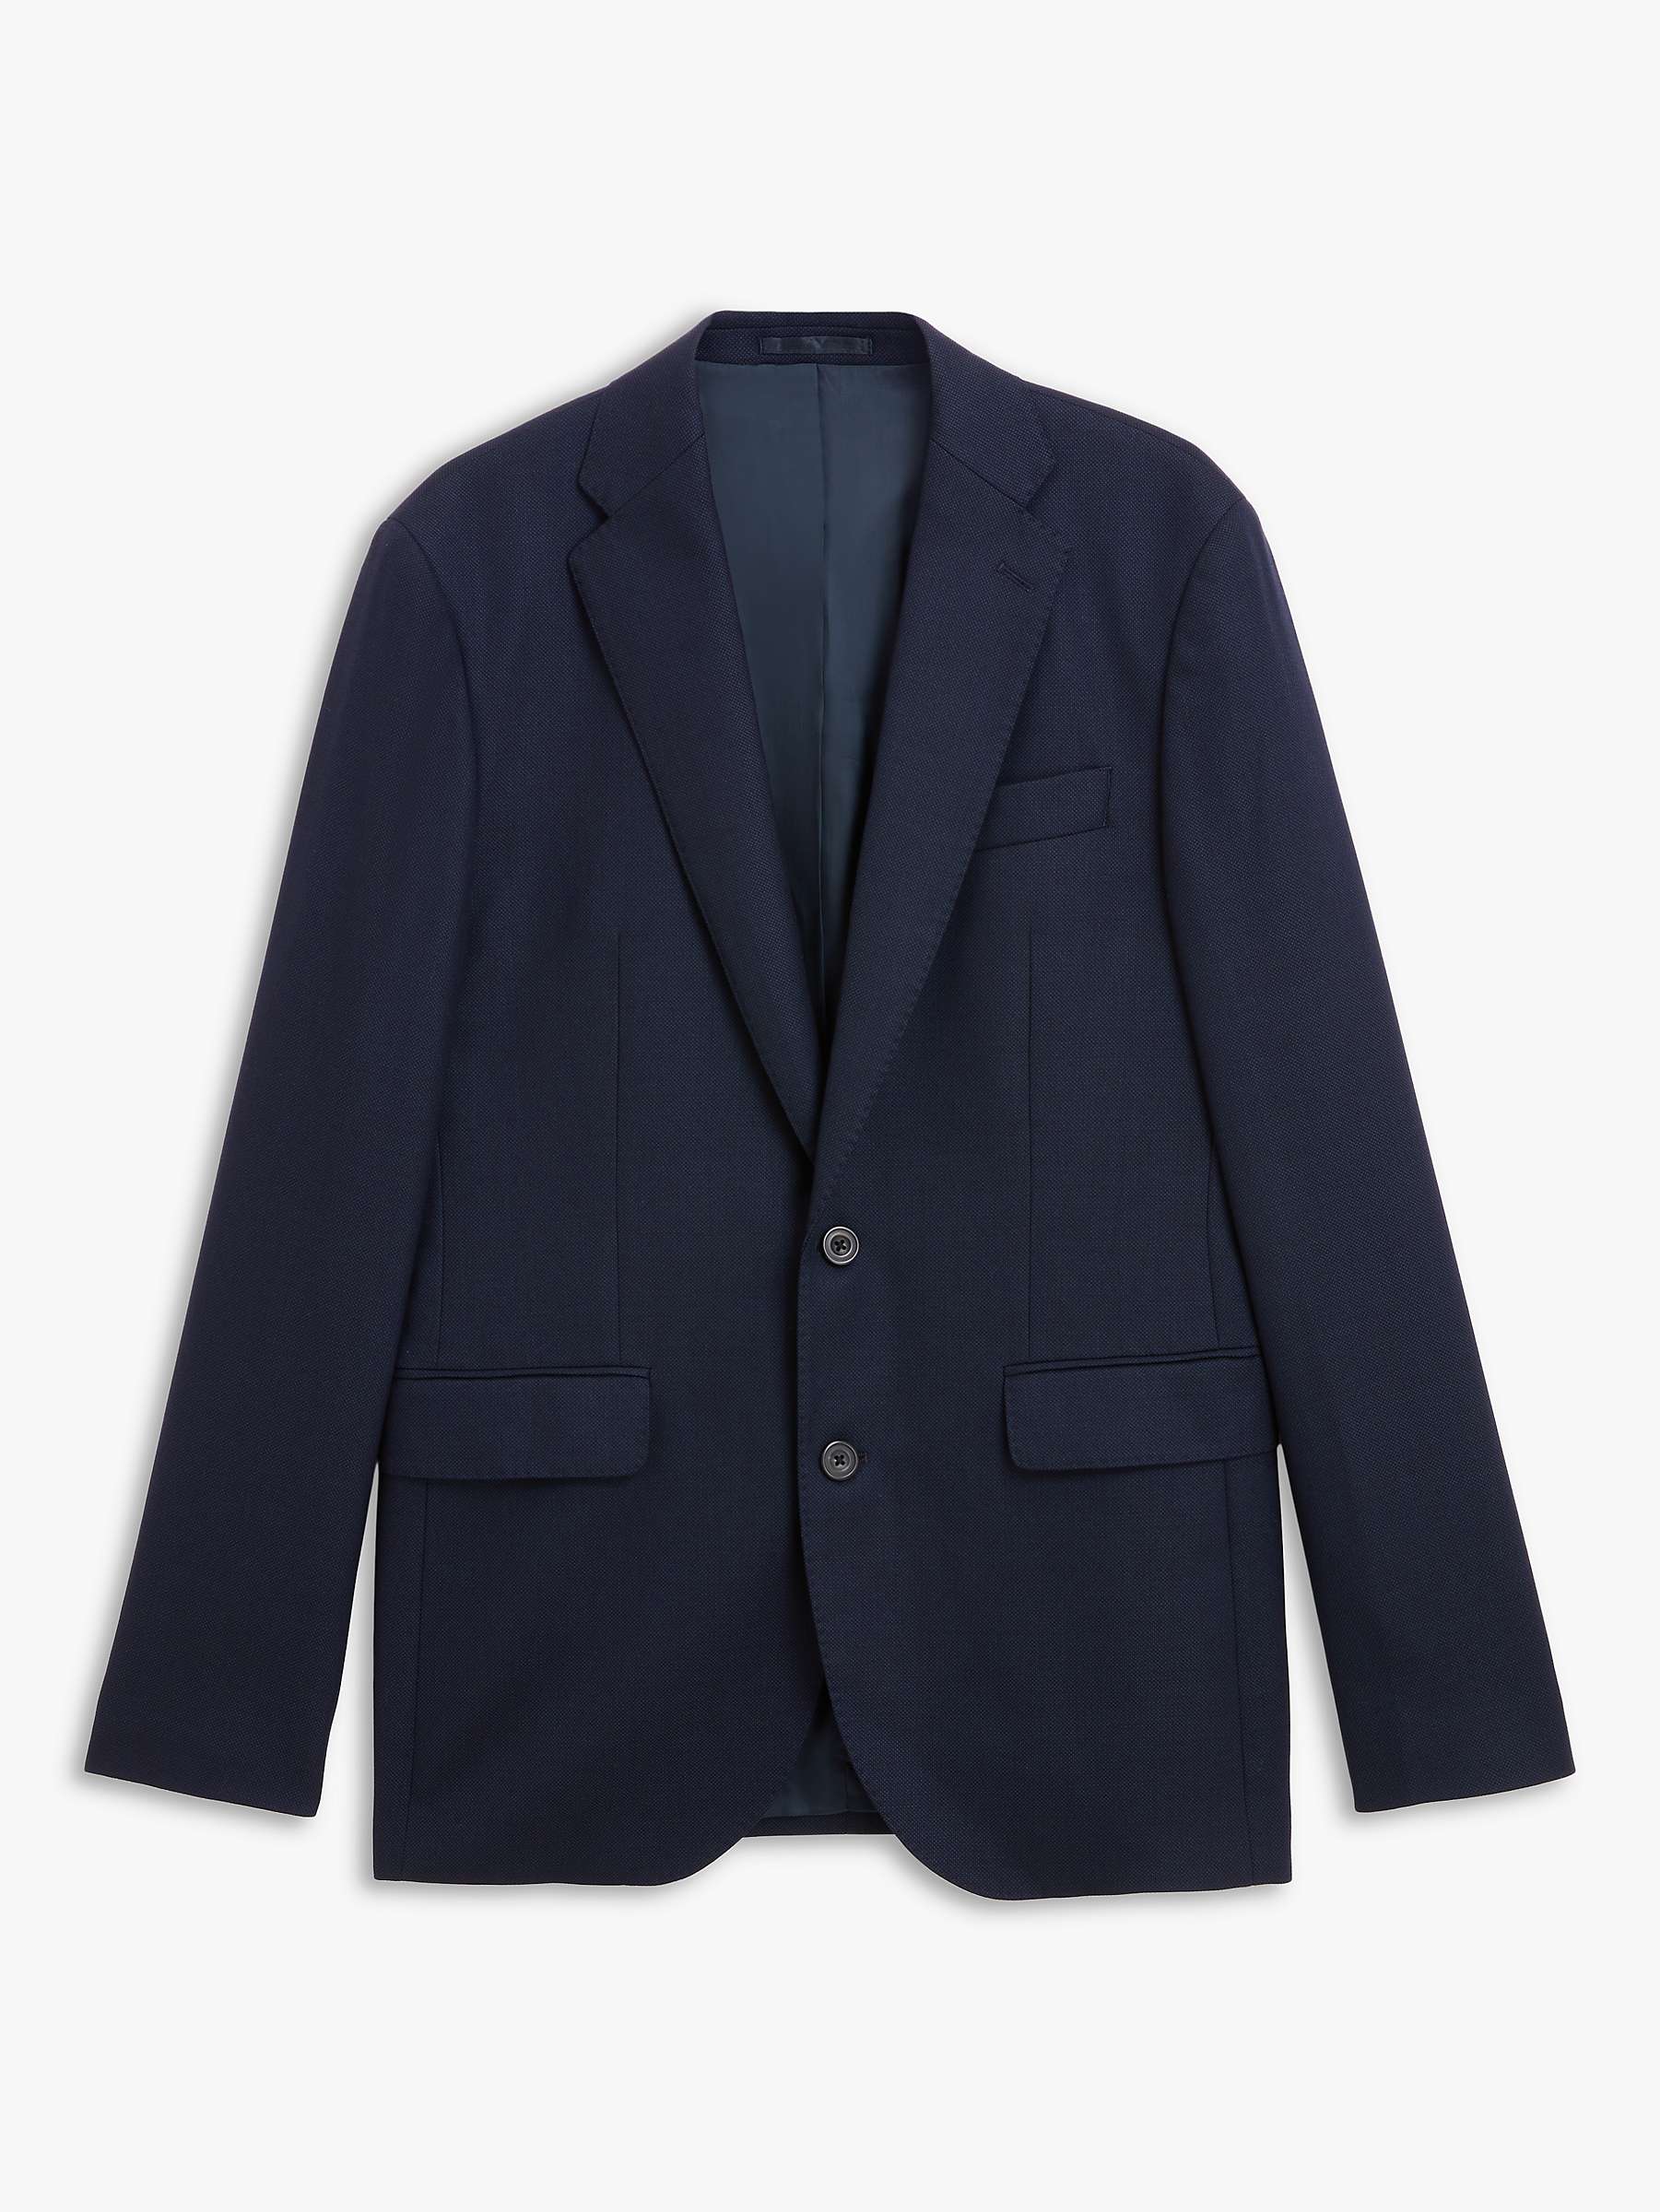 Buy John Lewis Super 100s Wool Birdseye Regular Fit Suit Jacket Online at johnlewis.com